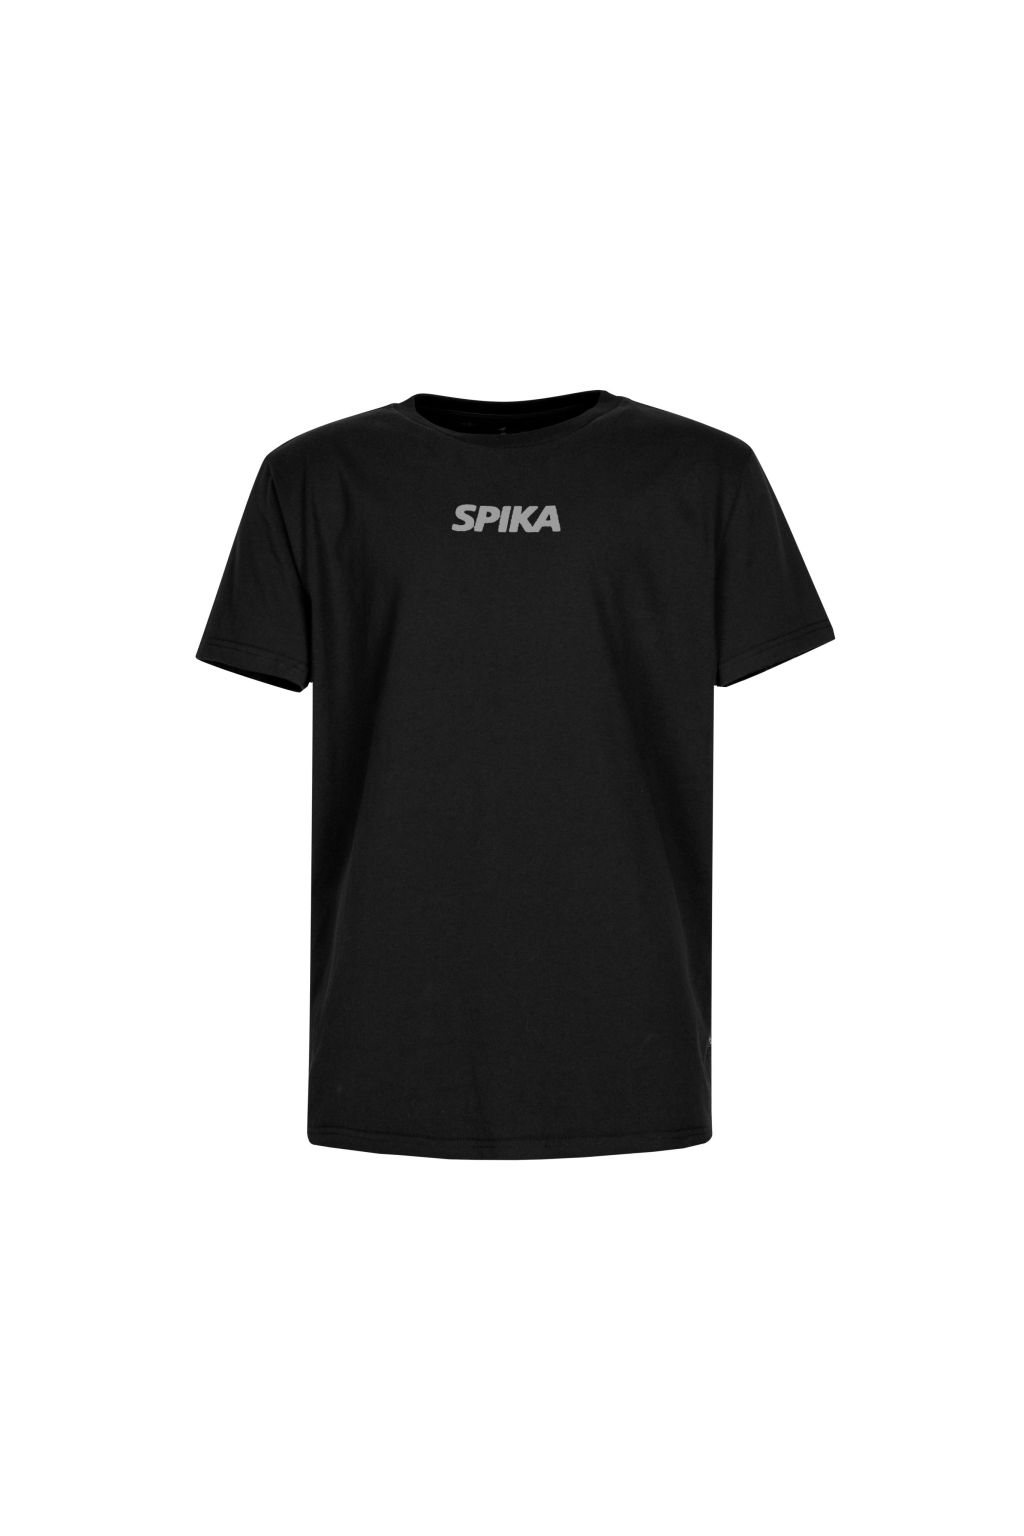 Spika GO Revolution Mens T-Shirt - Black - S - Mansfield Hunting & Fishing - Products to prepare for Corona Virus